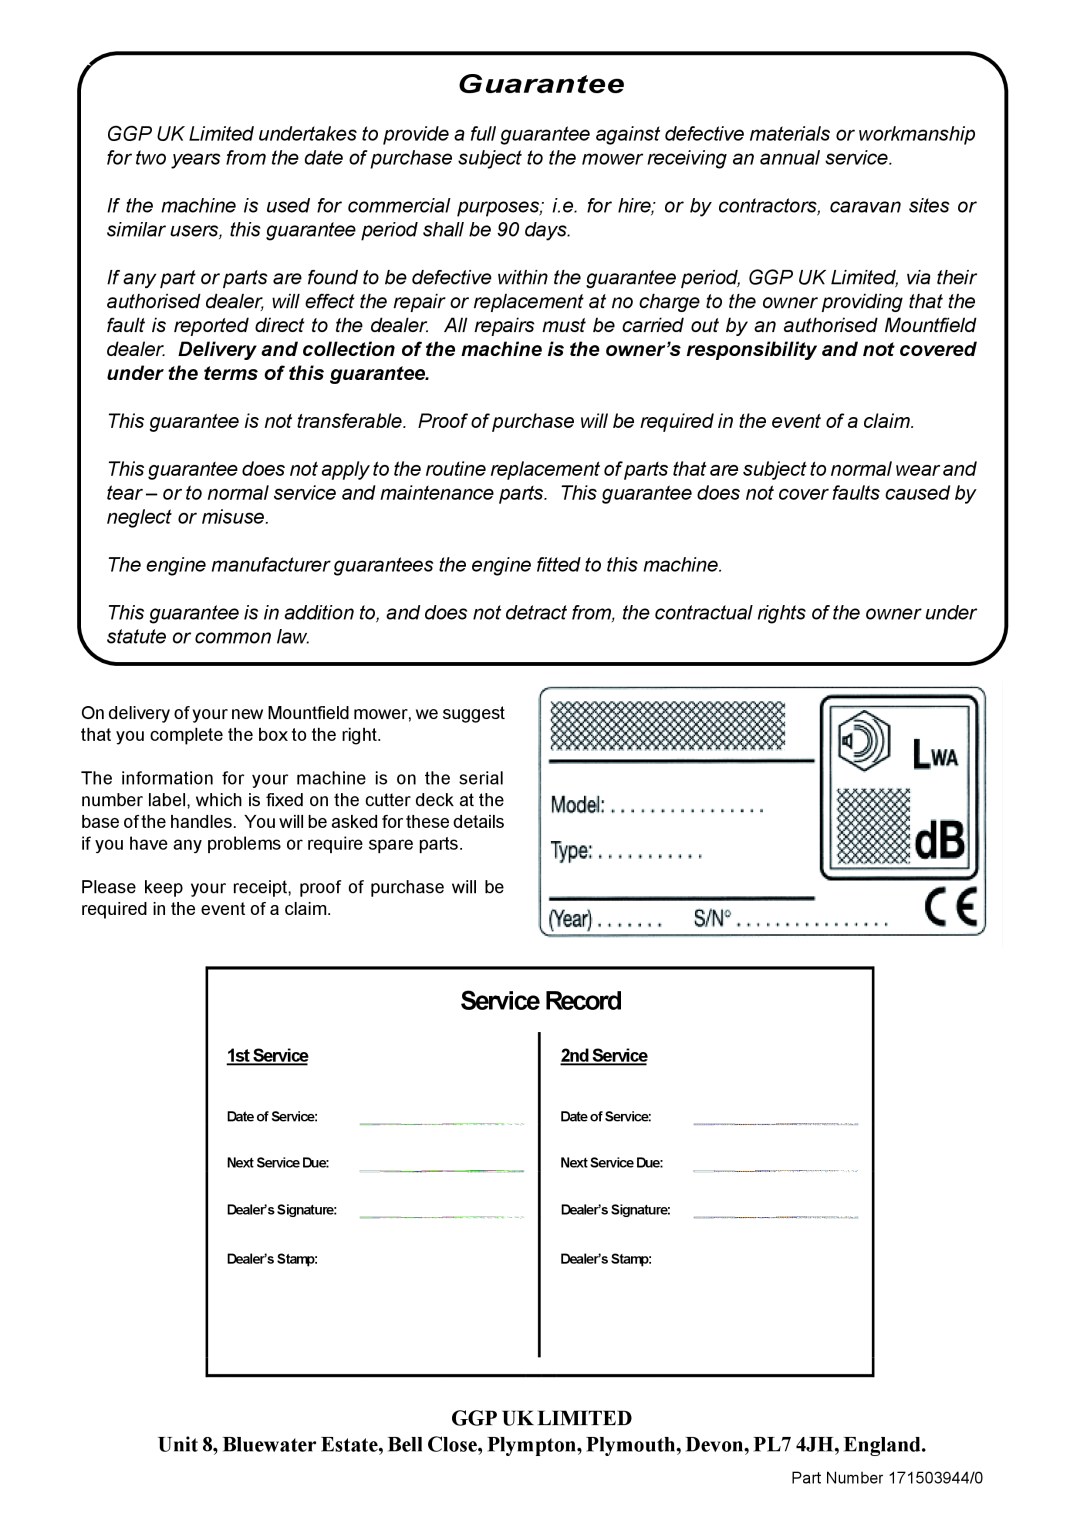 Mountfield SP536ES manual Guarantee, Service Record, Ggp Uk Limited 